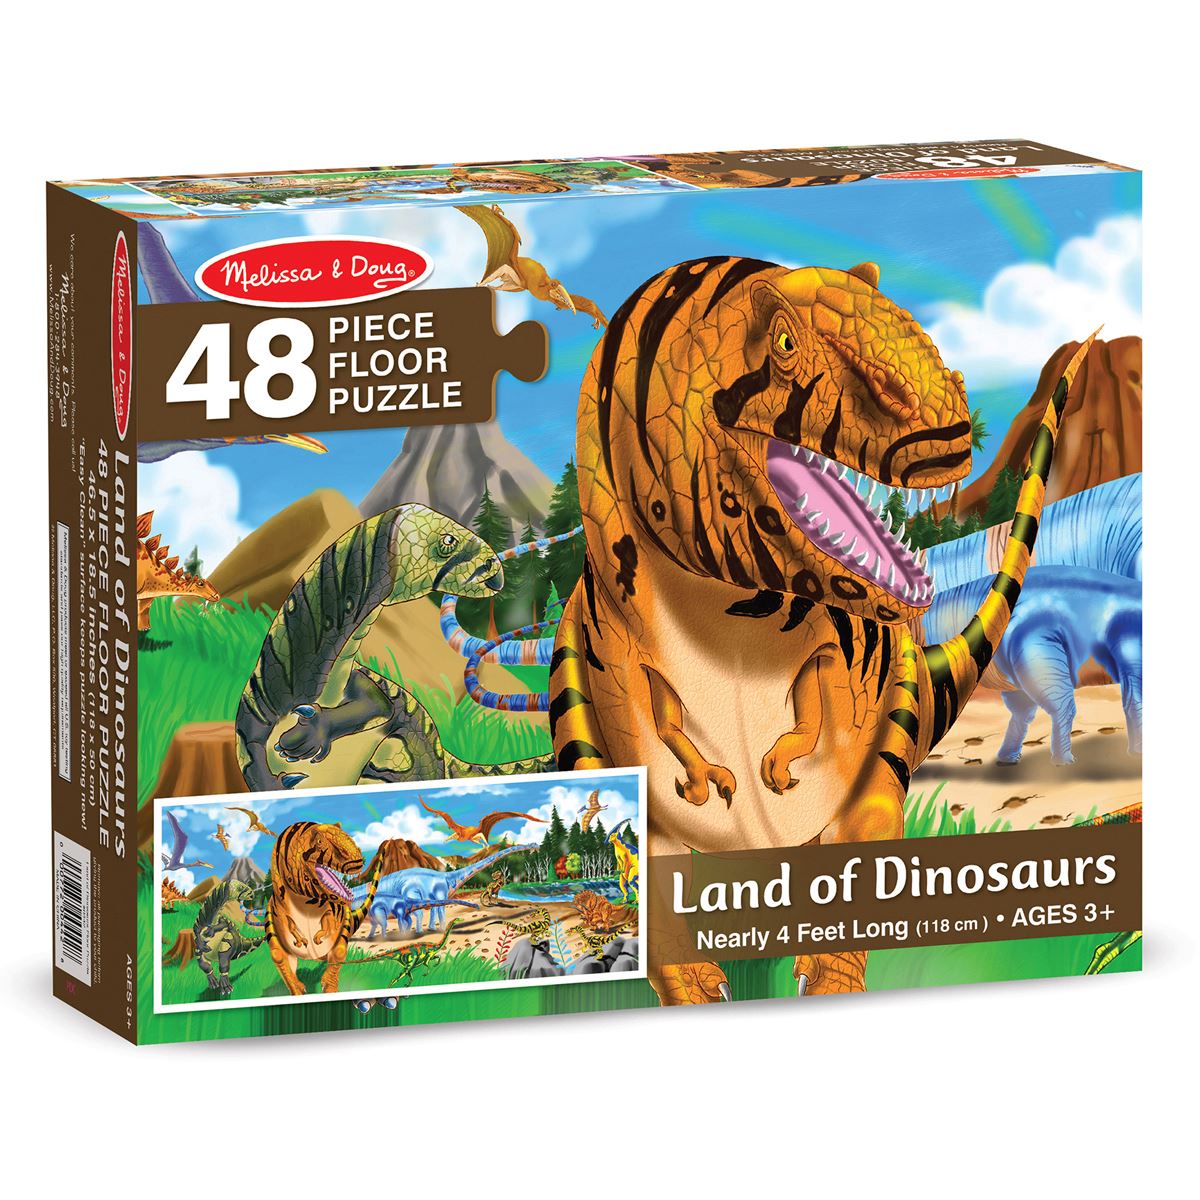 Melissa & Doug(R) 48pc. Land Of Dinosaurs Floor Puzzle